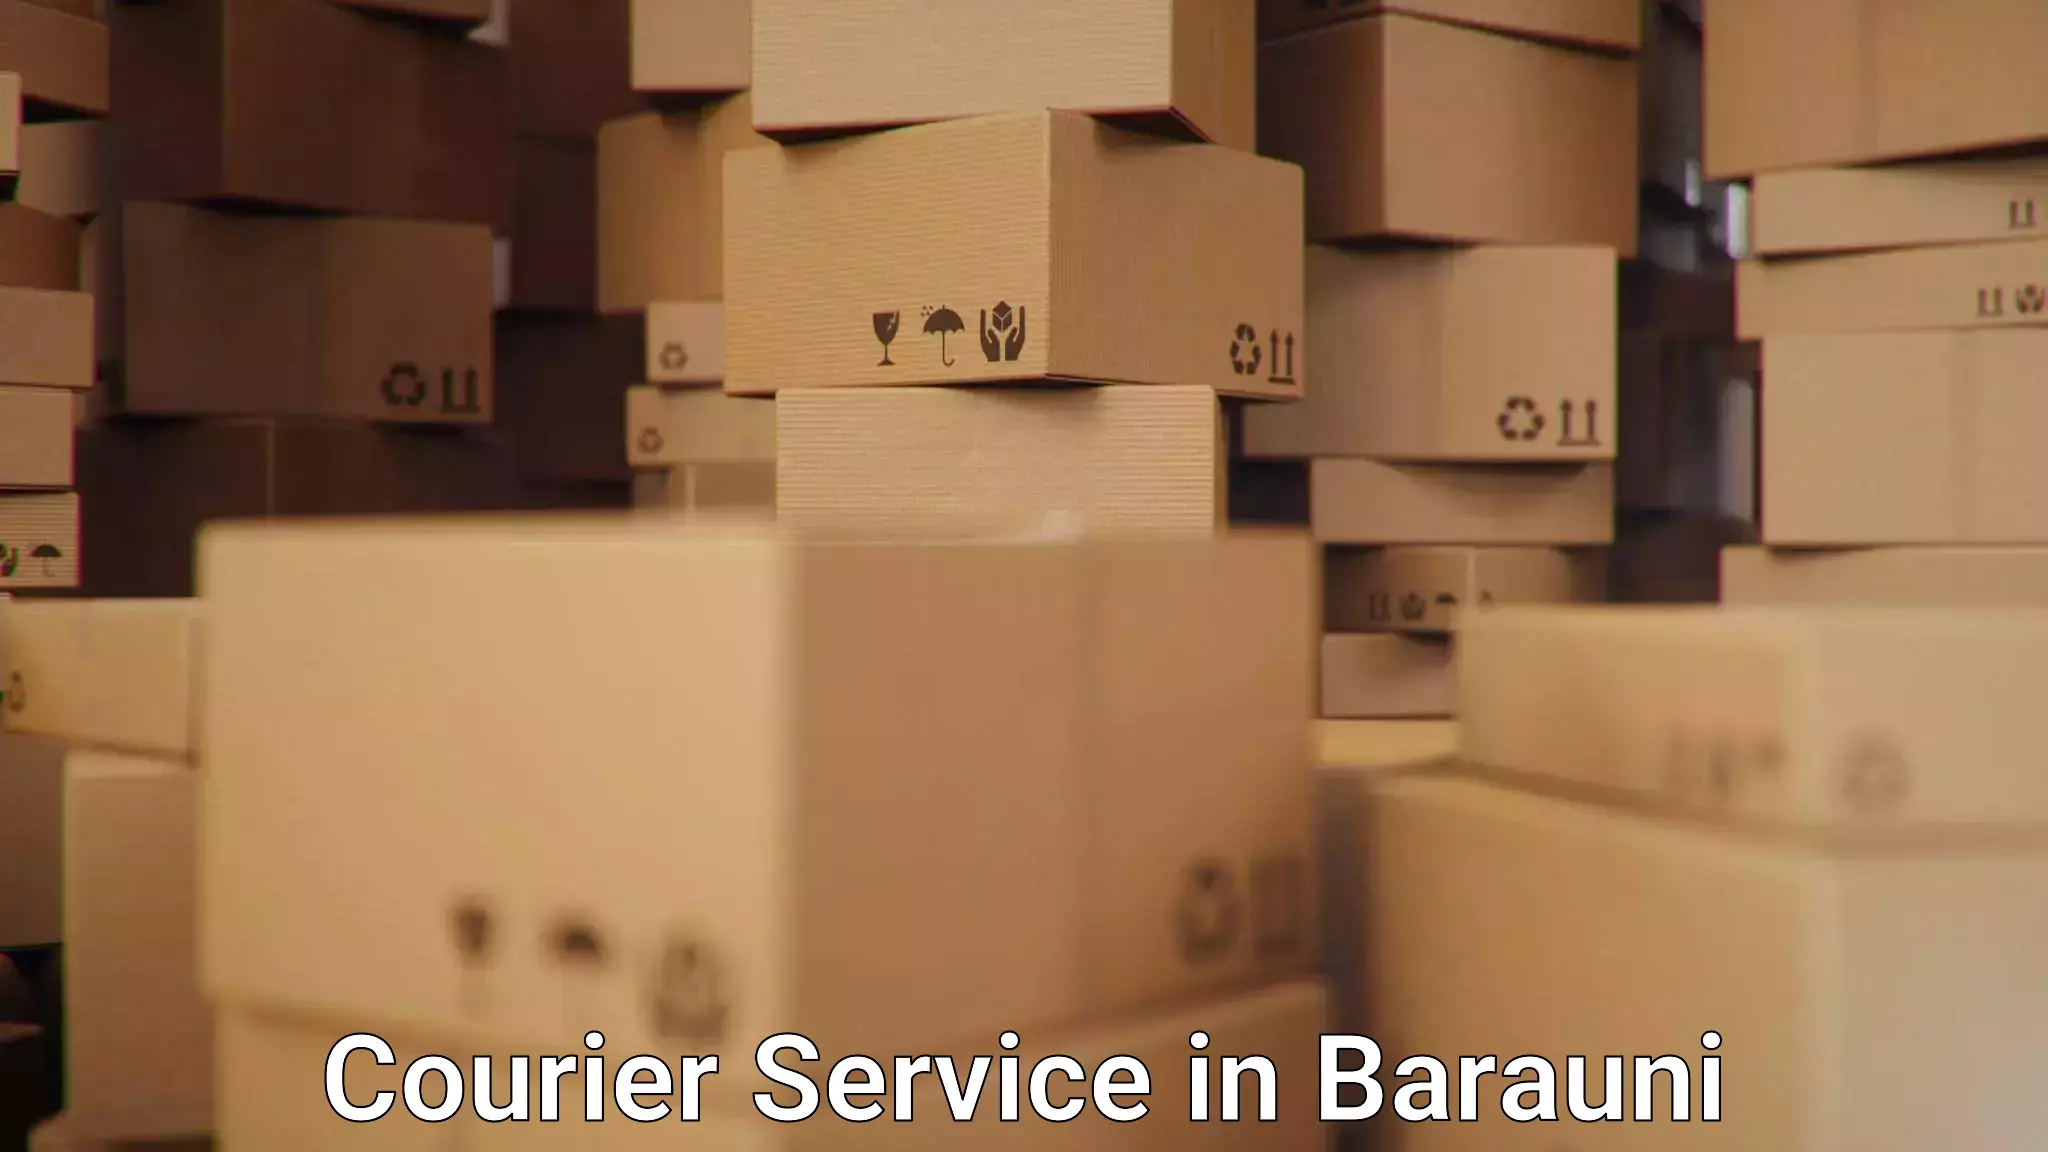 Enhanced shipping experience in Barauni